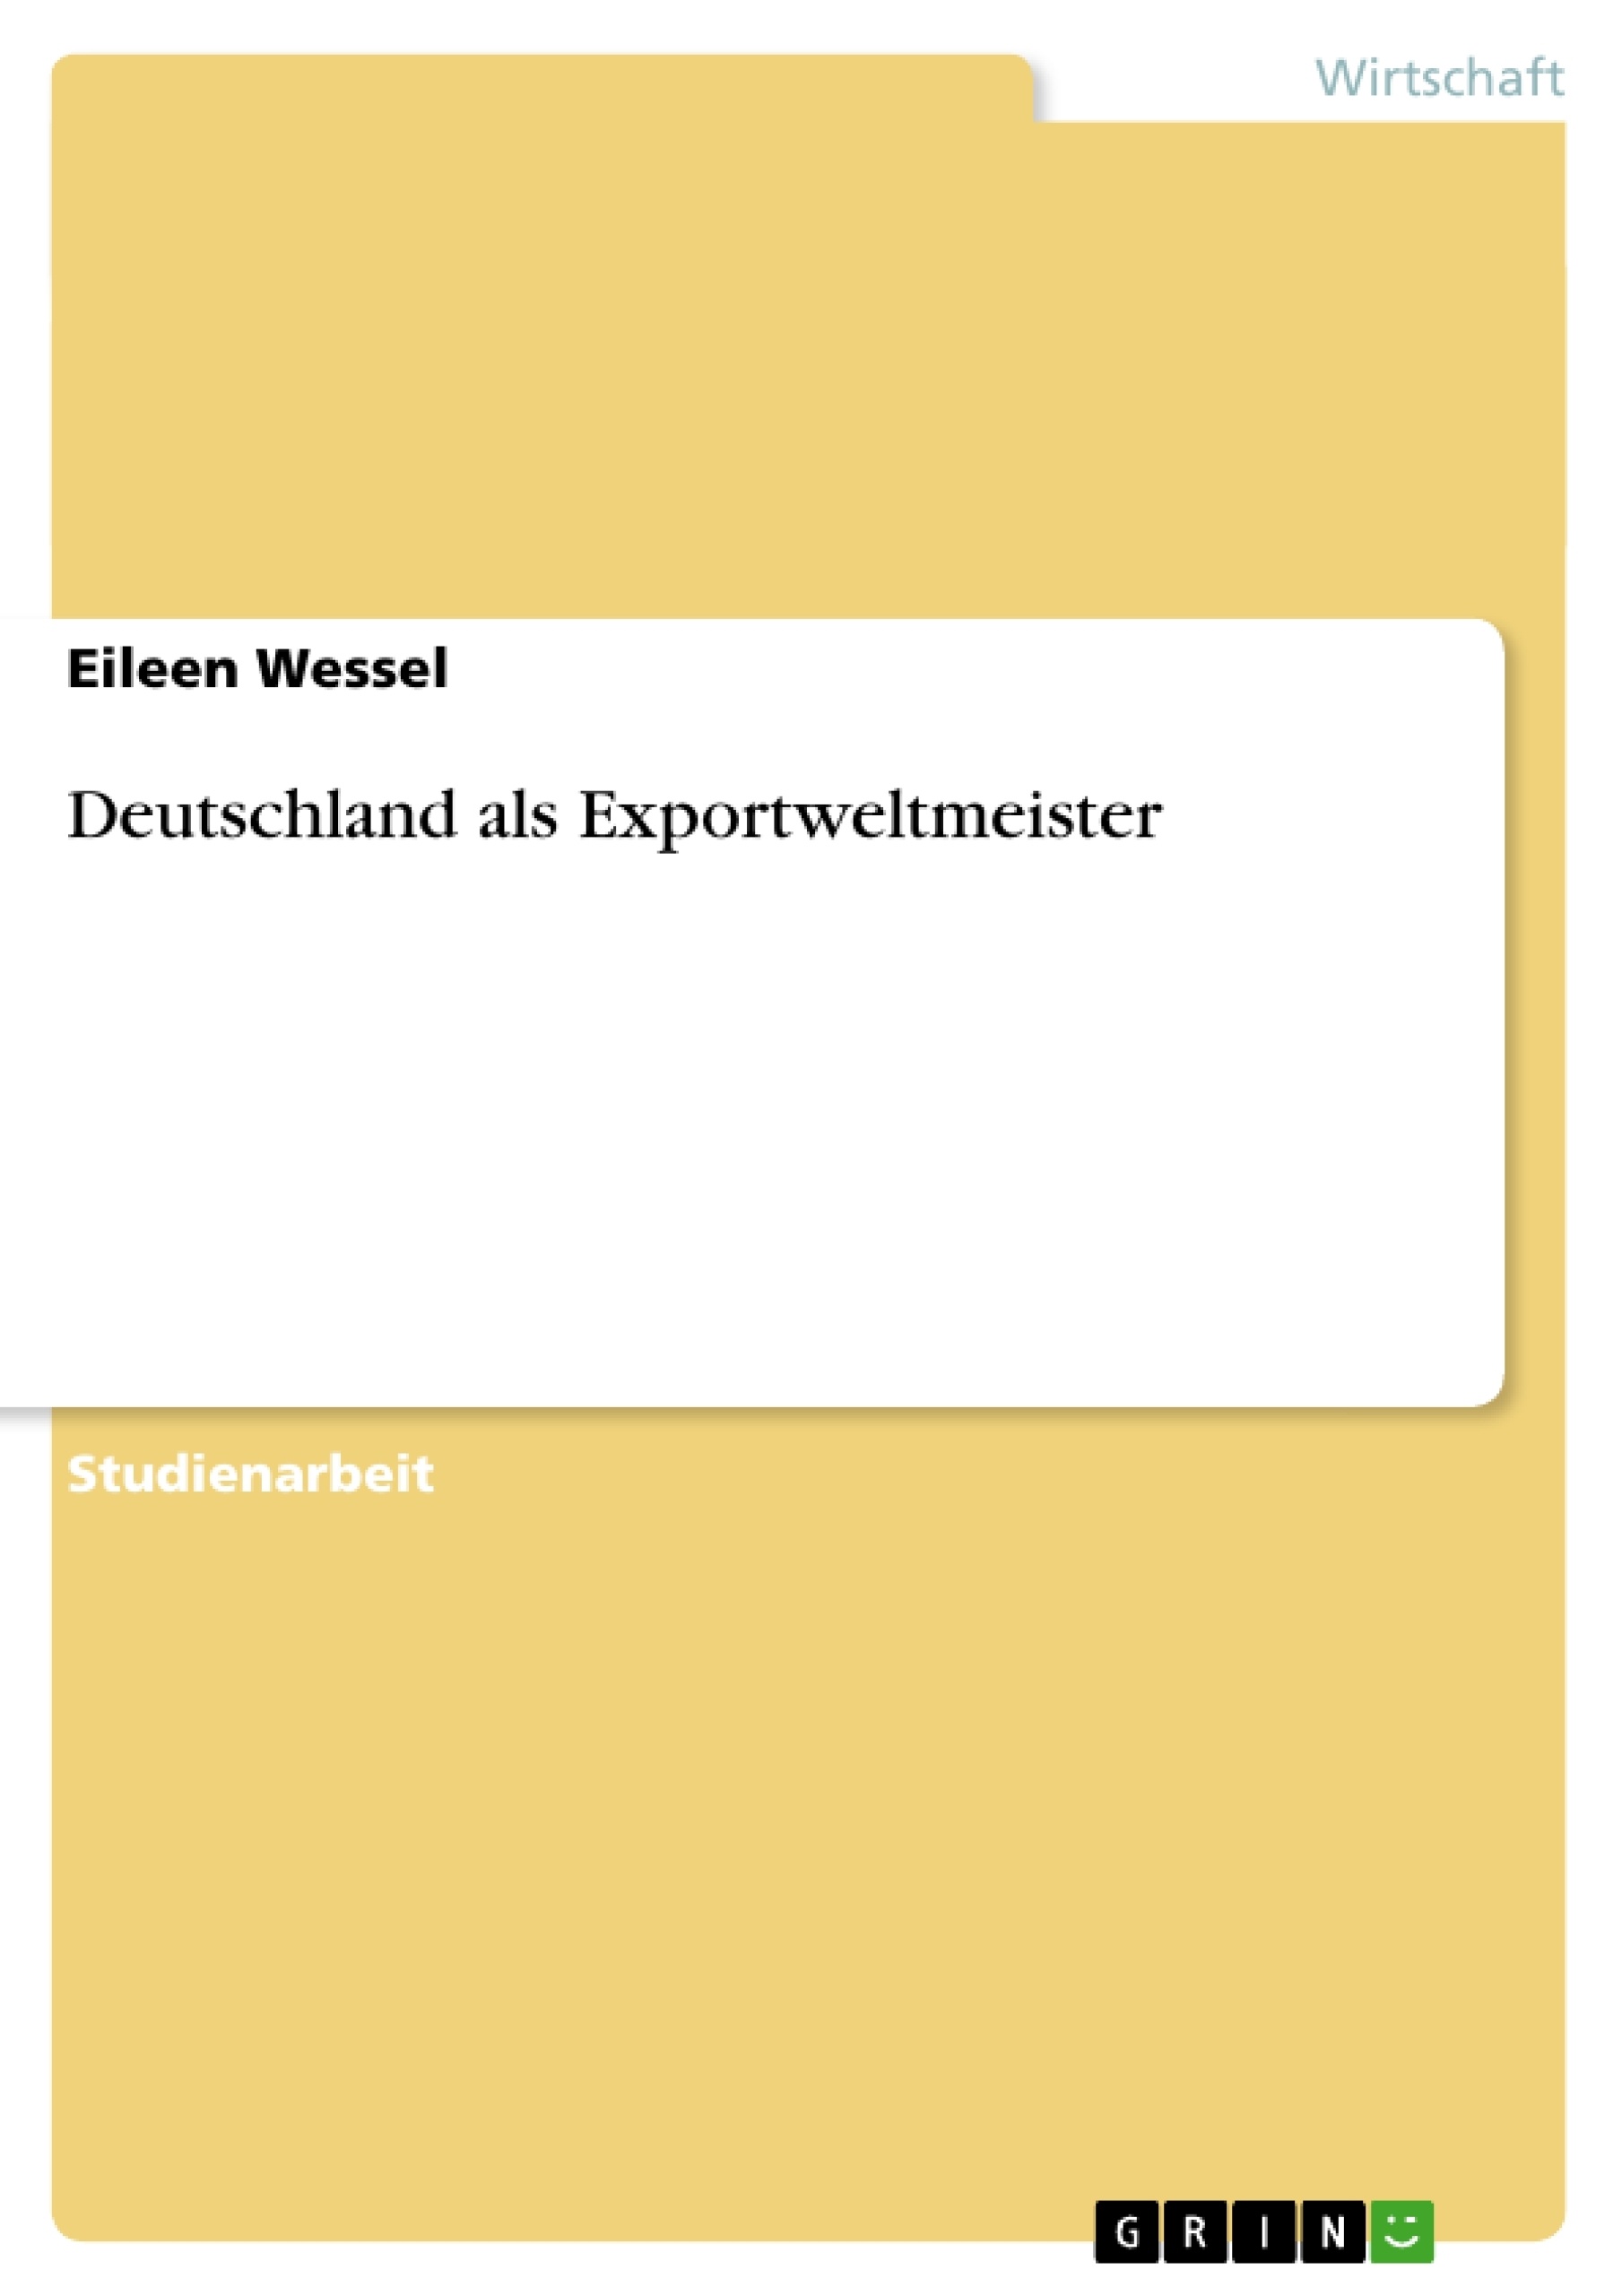 Título: Deutschland als Exportweltmeister